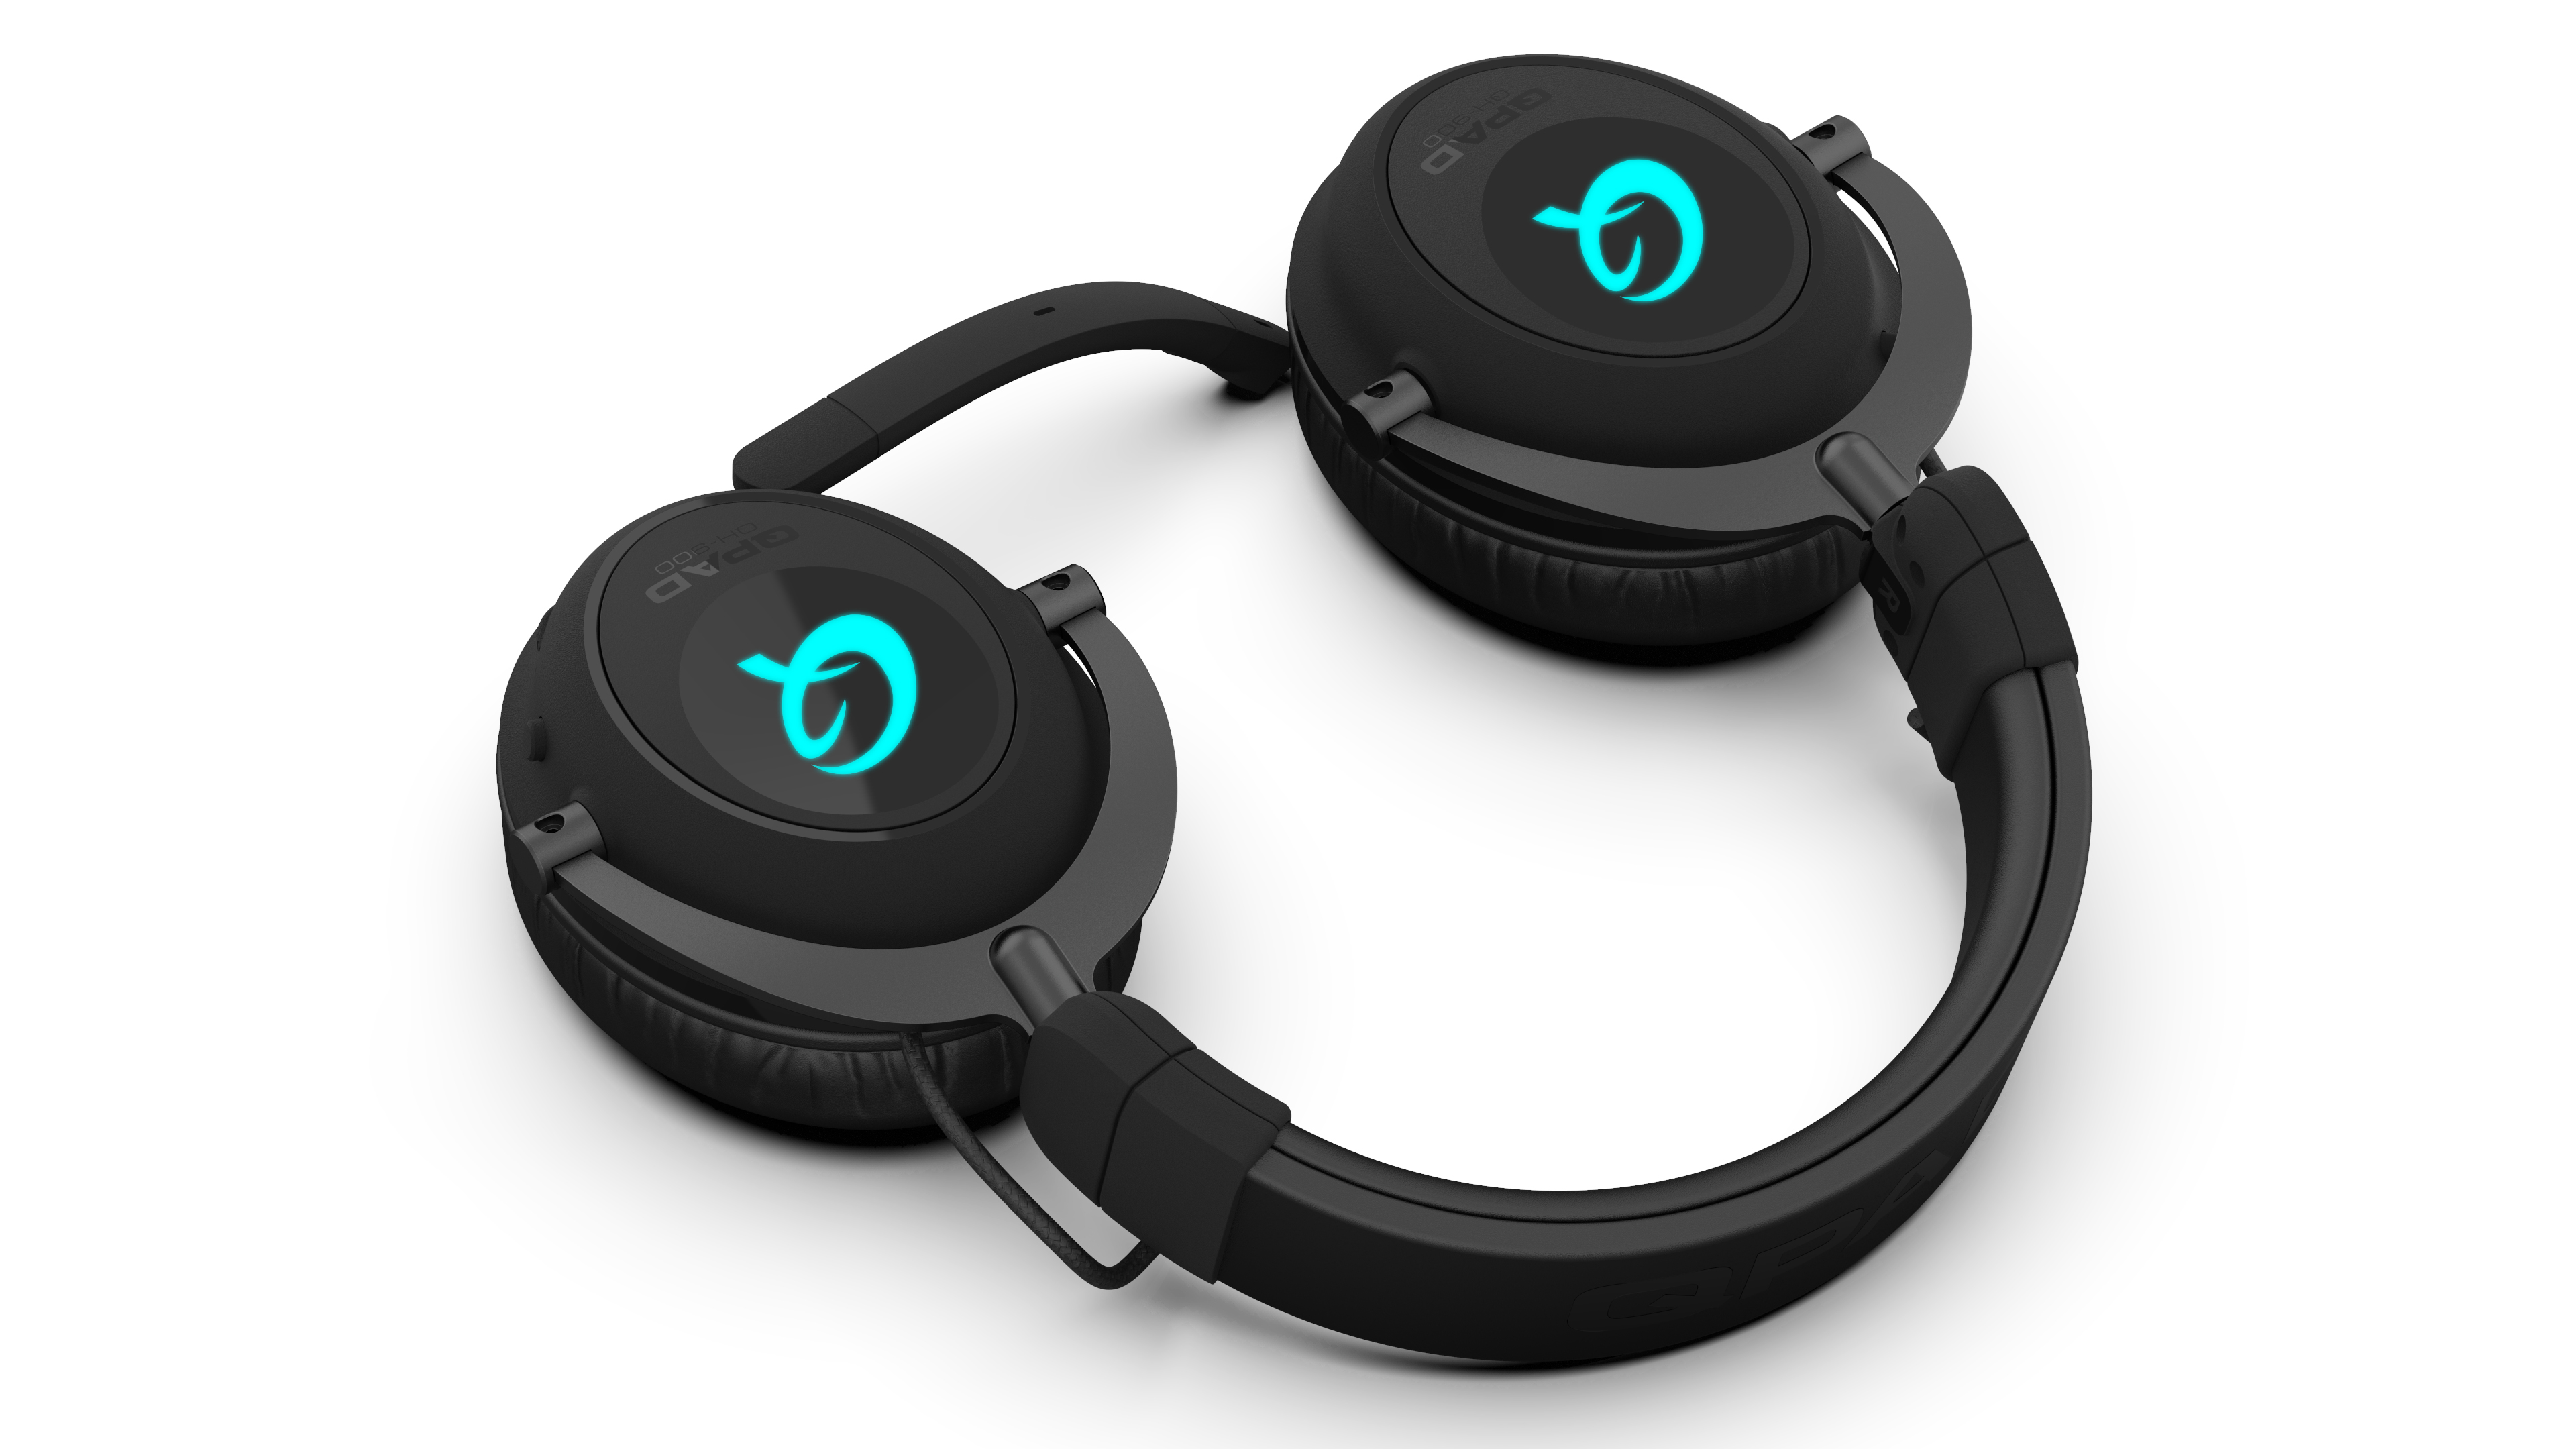 QPAD Bluetooth Headset Schwarz Gaming Over-ear QPAD®|QH900,